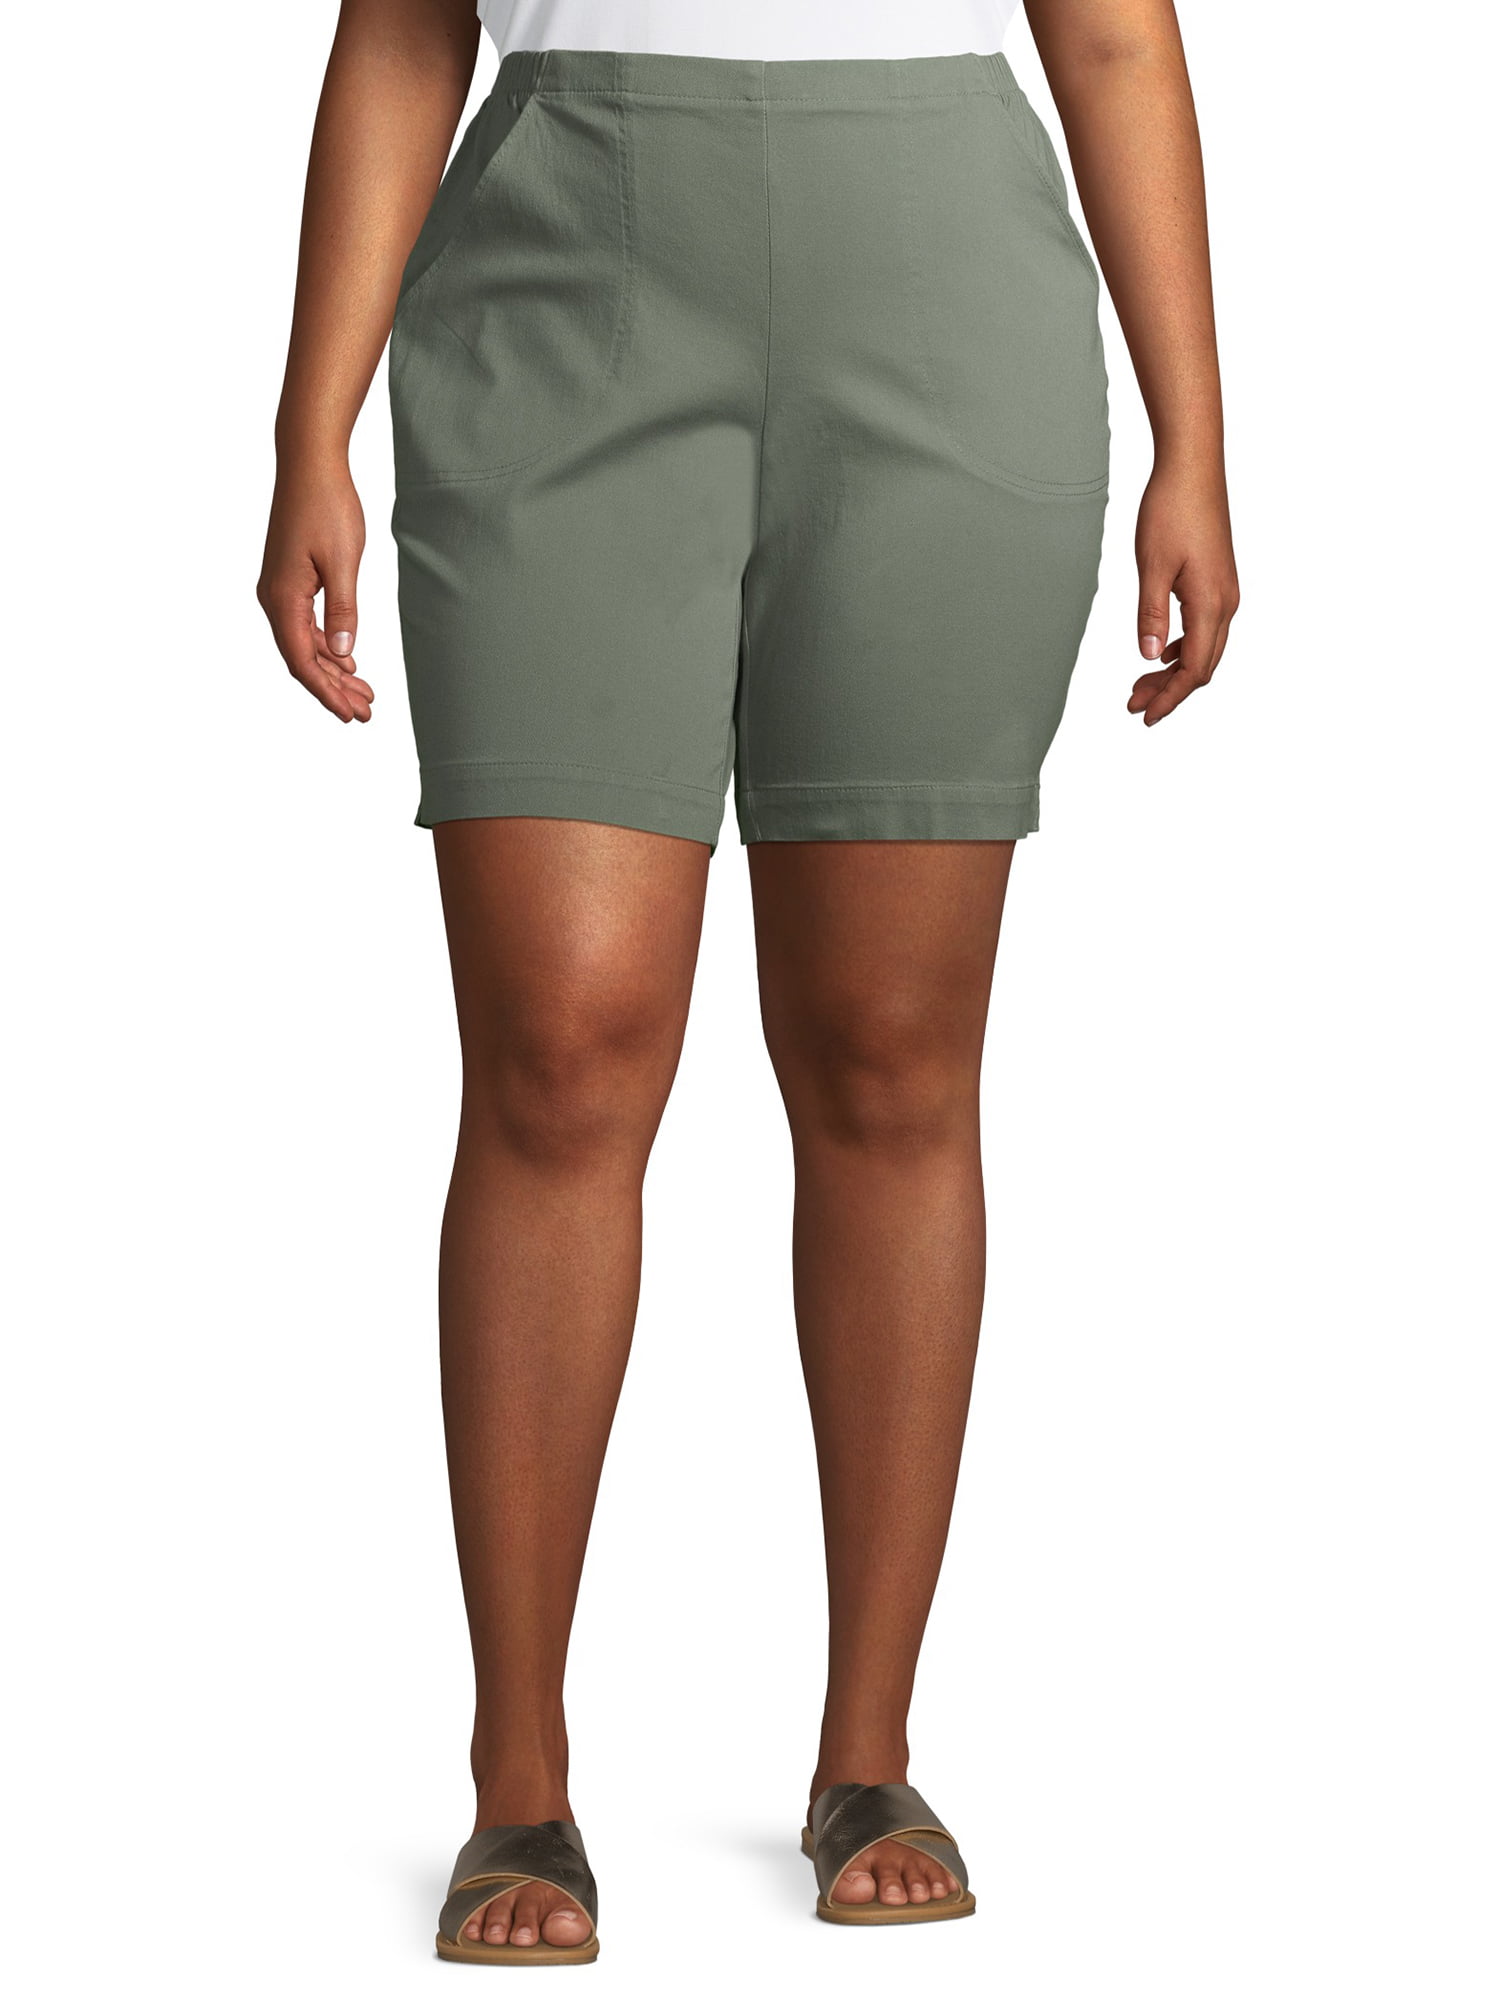 Just My Size Women's Plus Size 2 Pocket Pull on Shorts - Walmart.com